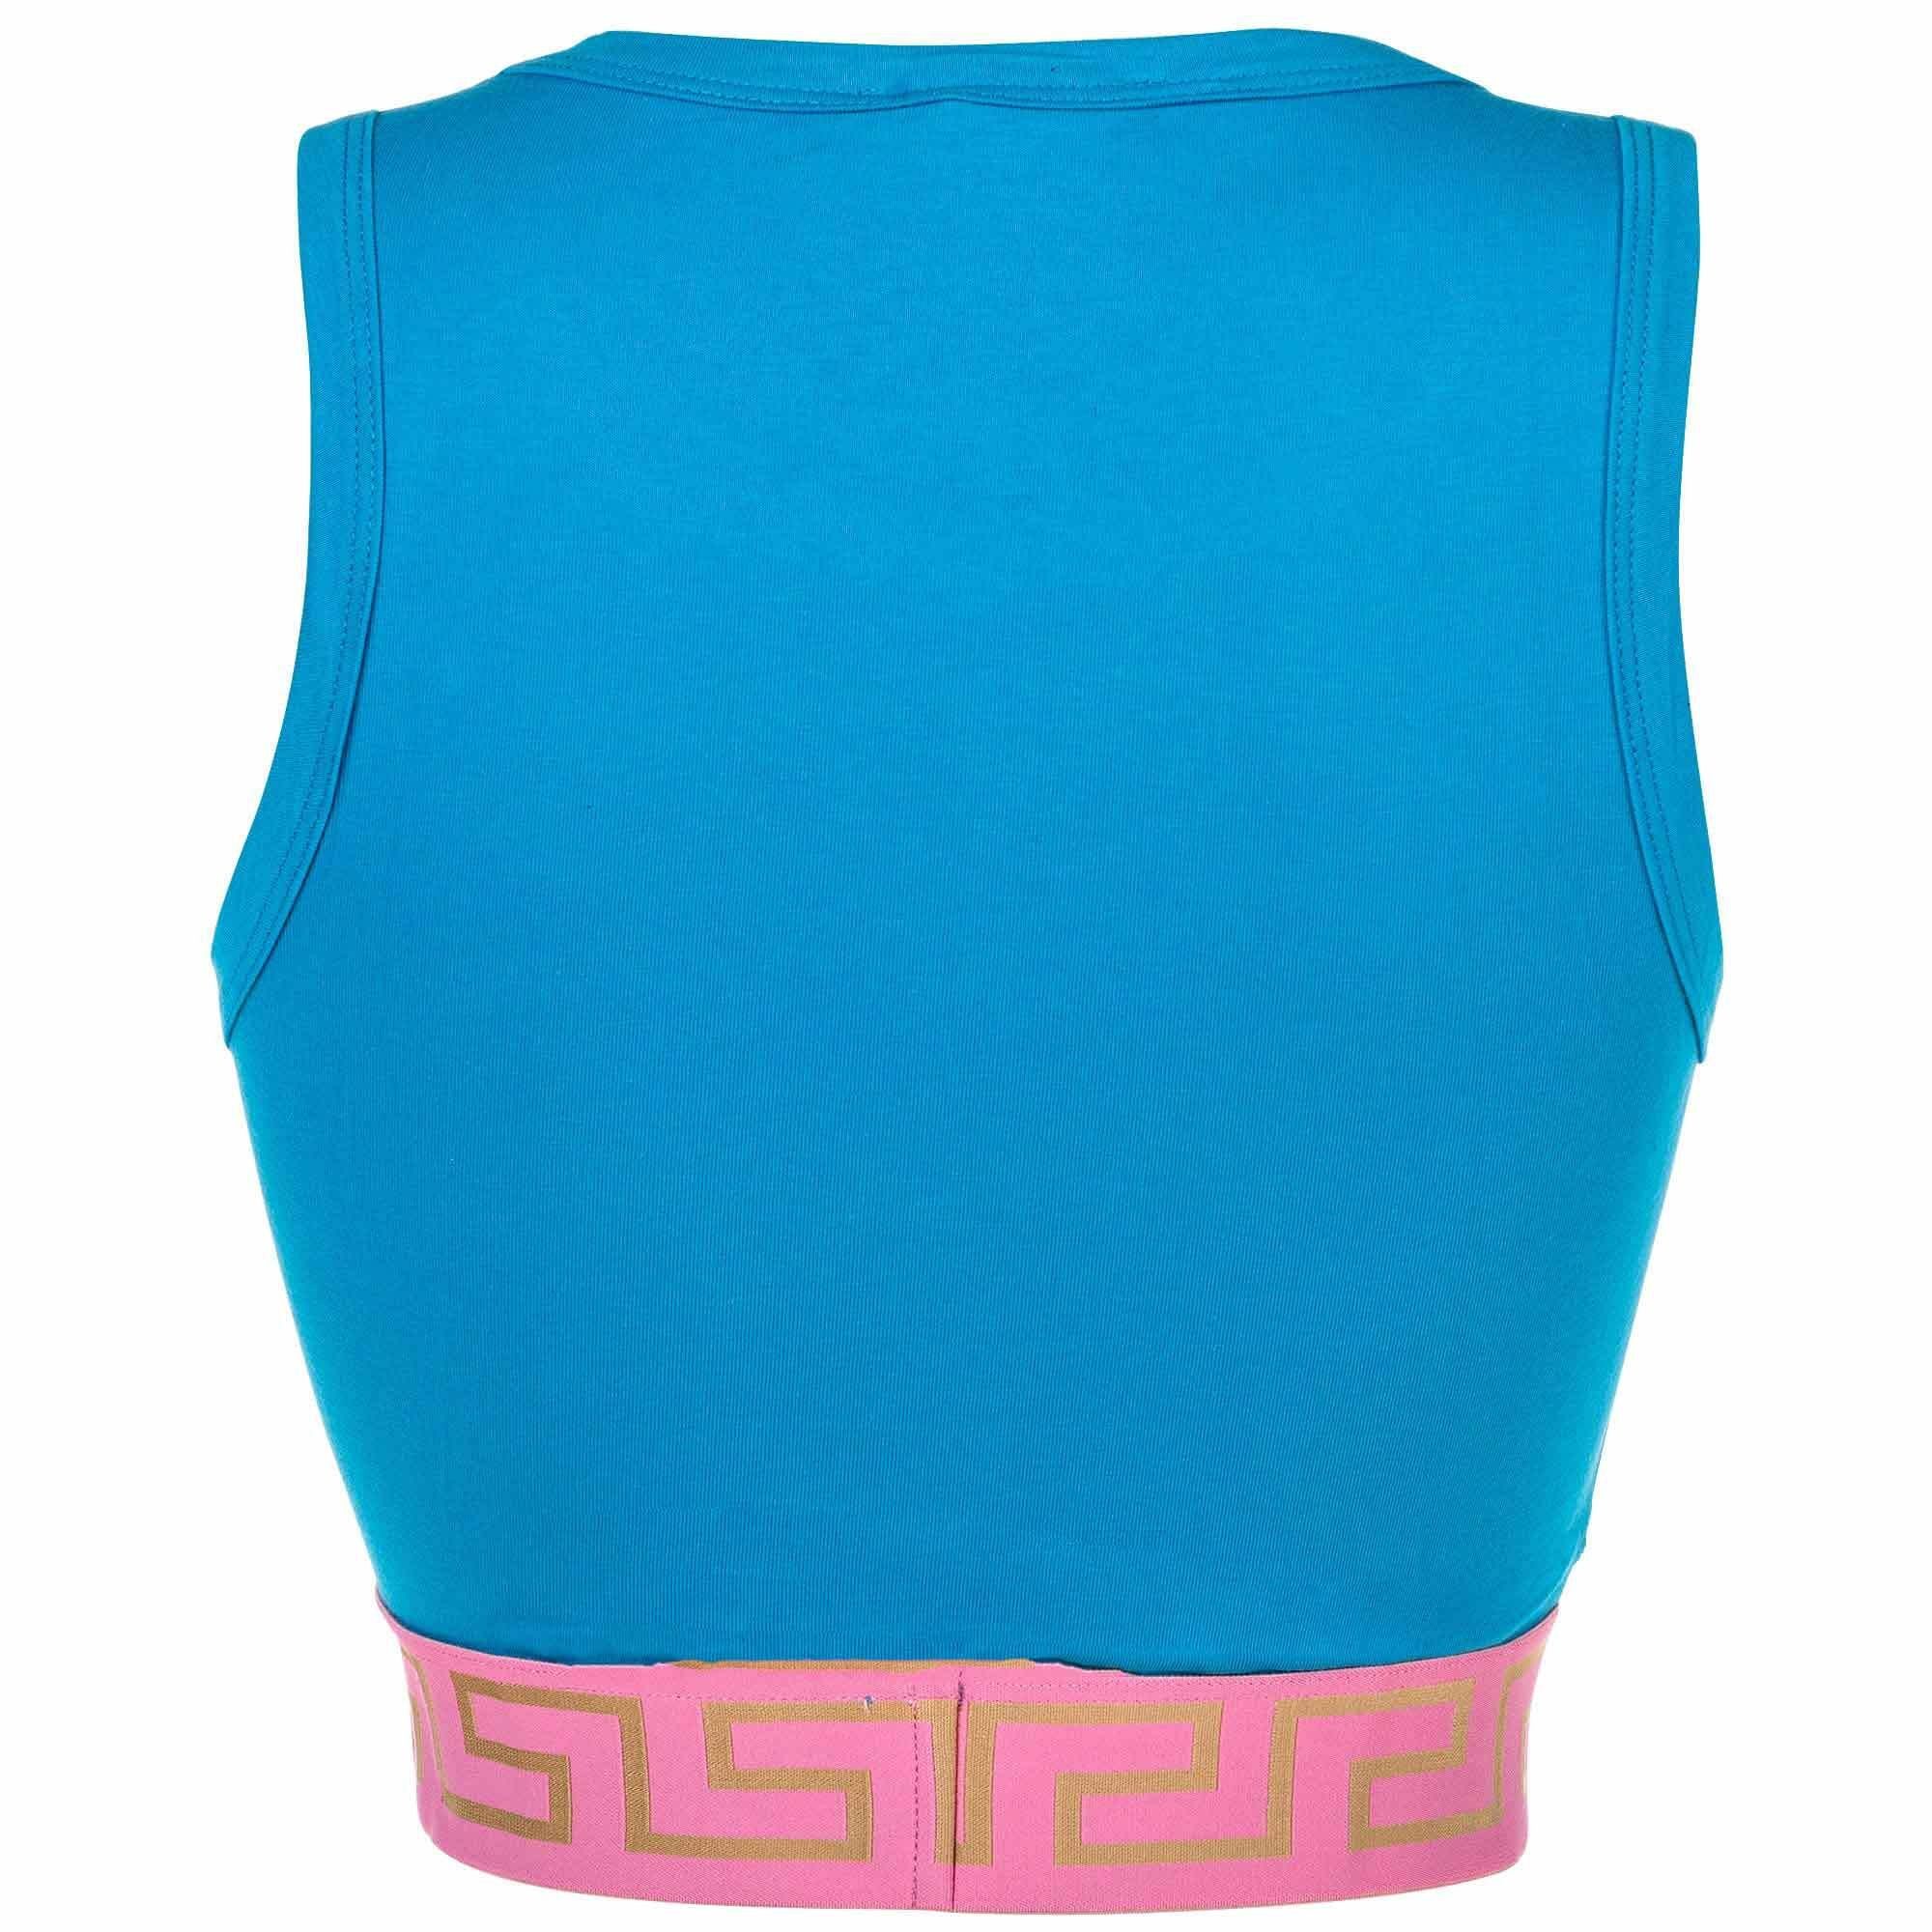 Versace T-Shirt, Bustier - Underwear Bustier Tank Damen TOPEKA, Blau/Rosa